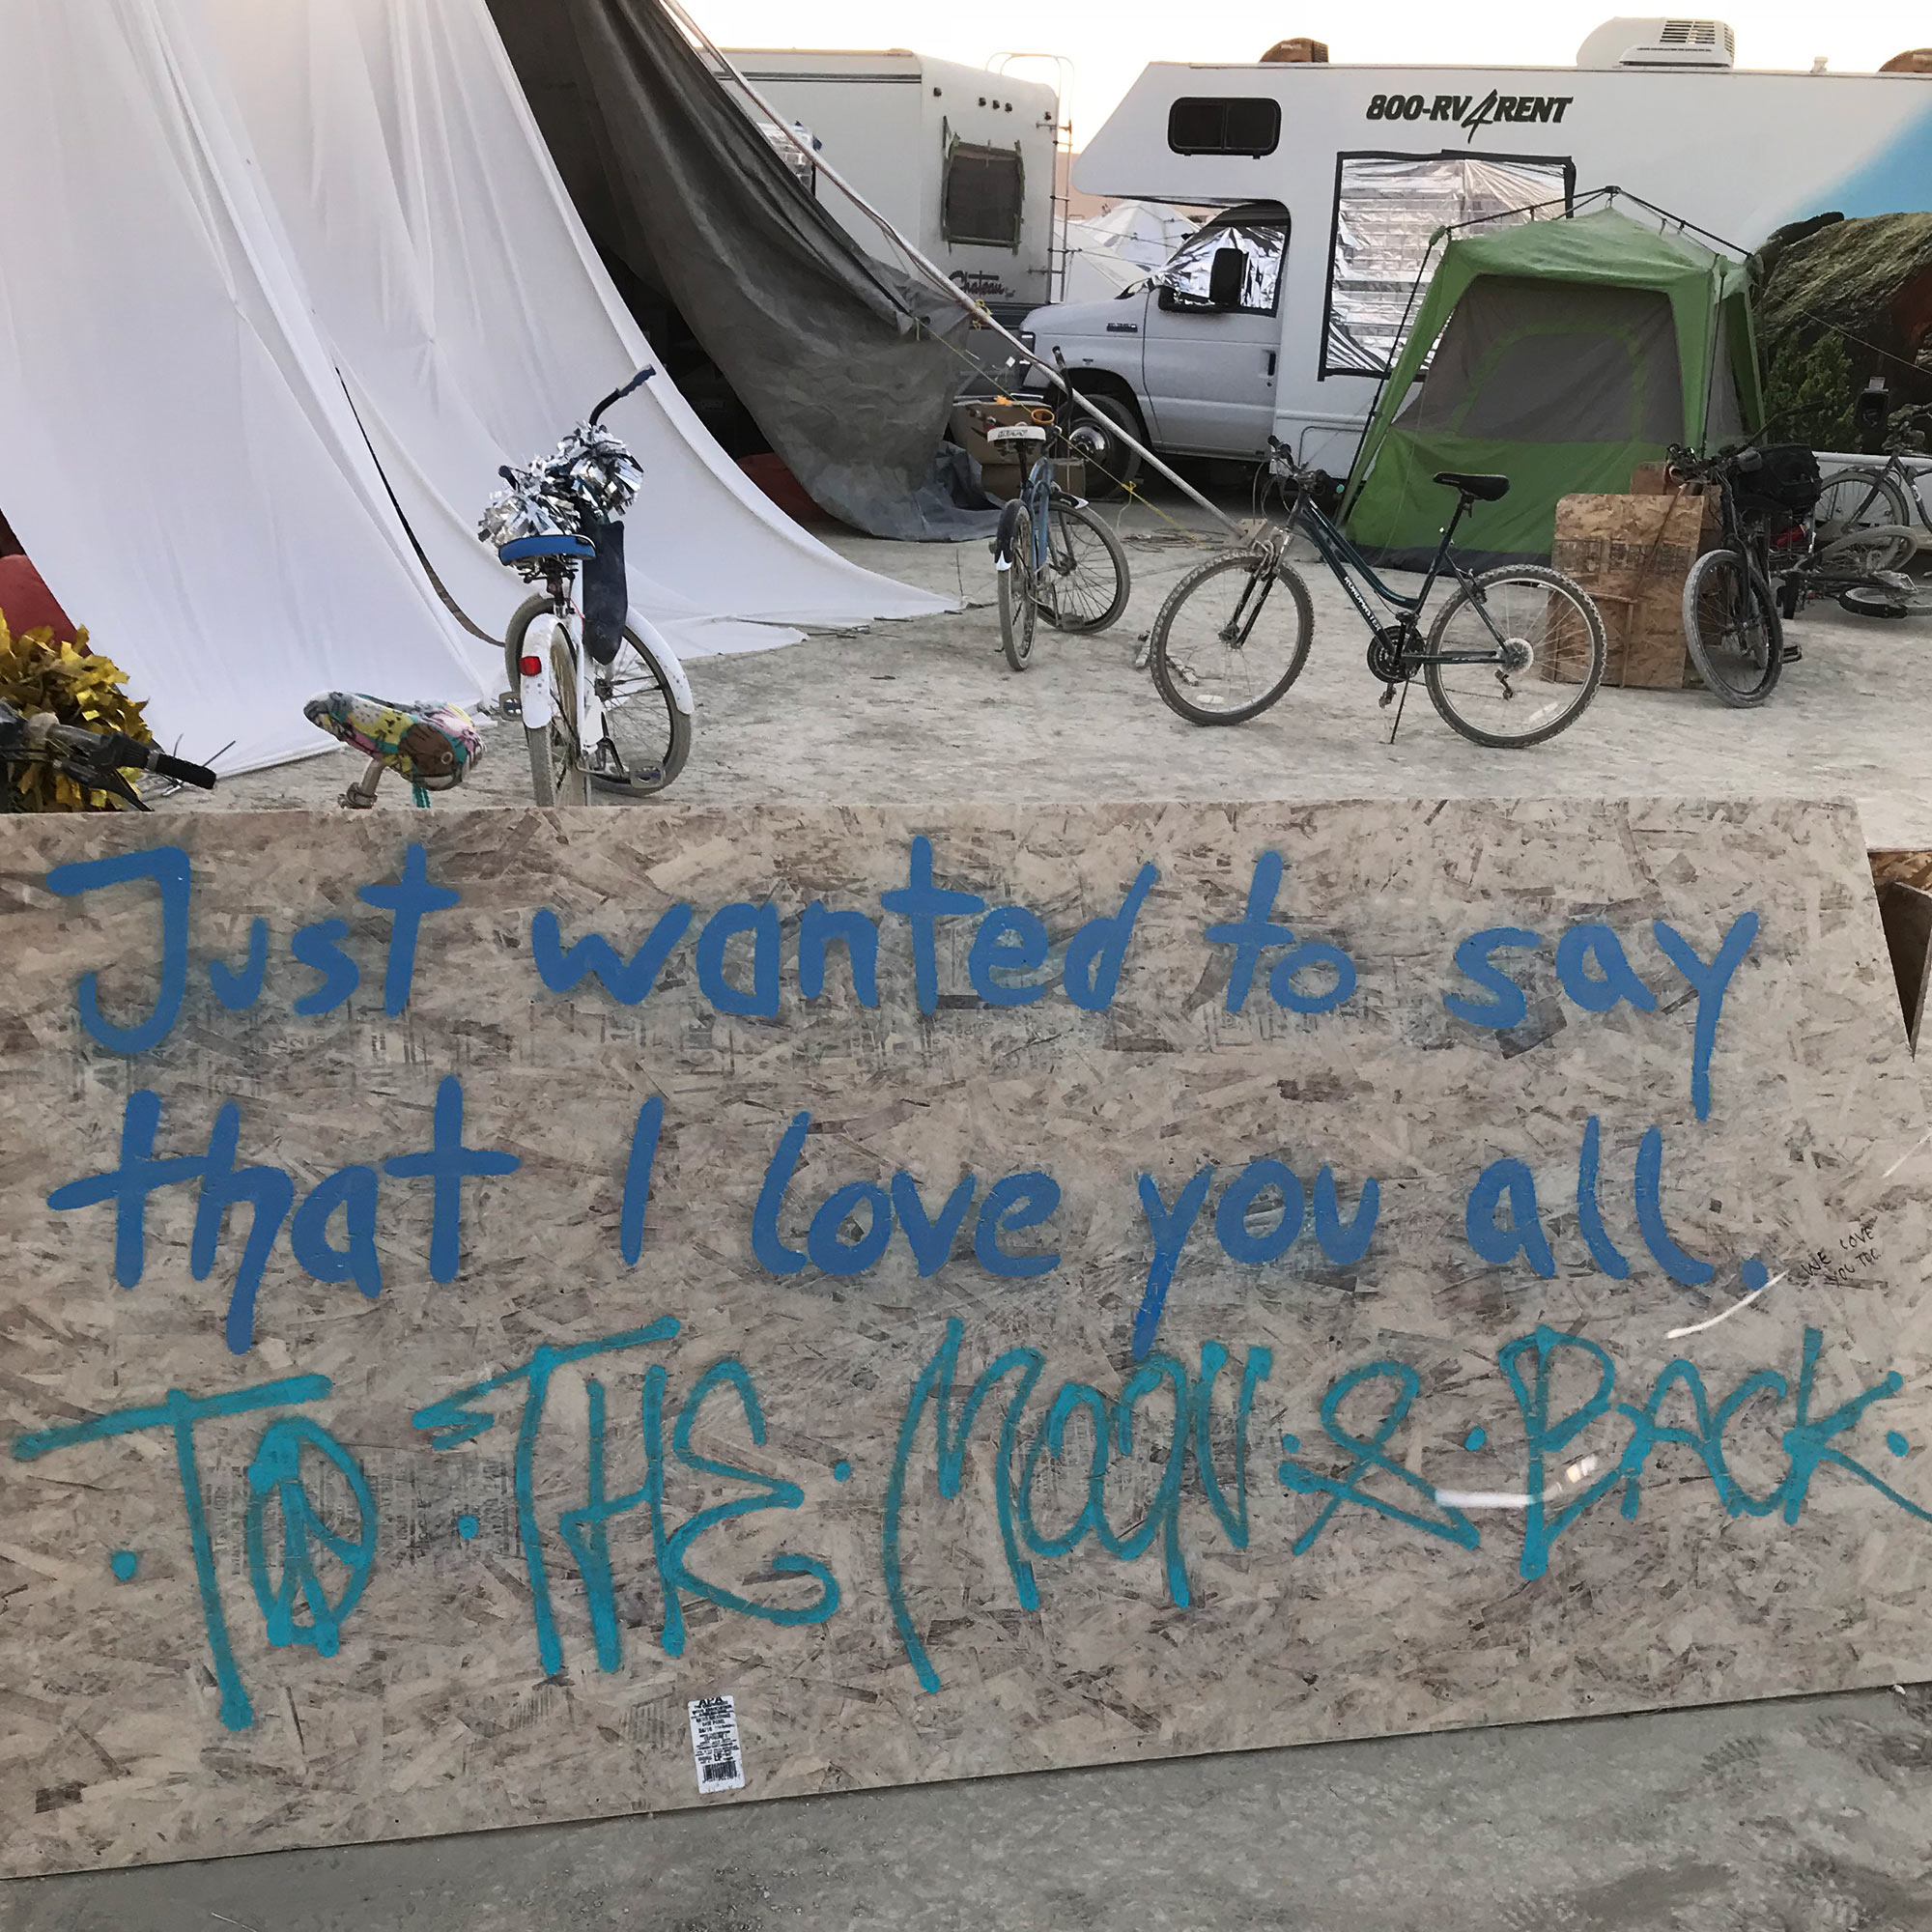 Wise words at Burning Man